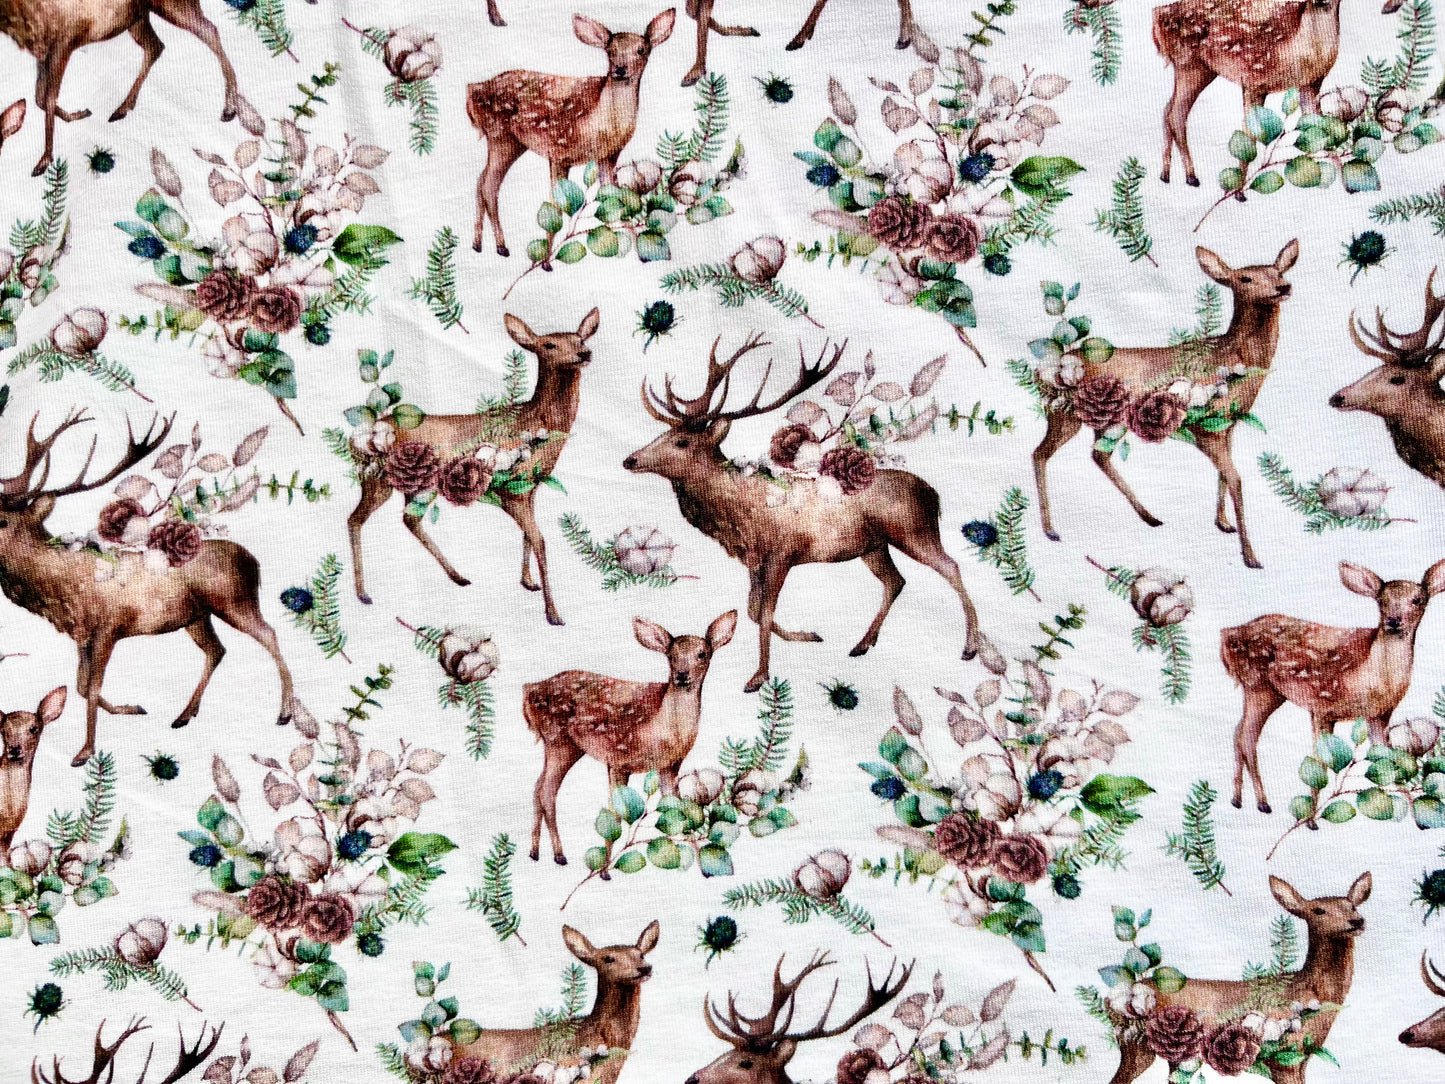 Deer Print Rudford Top fabric close up image